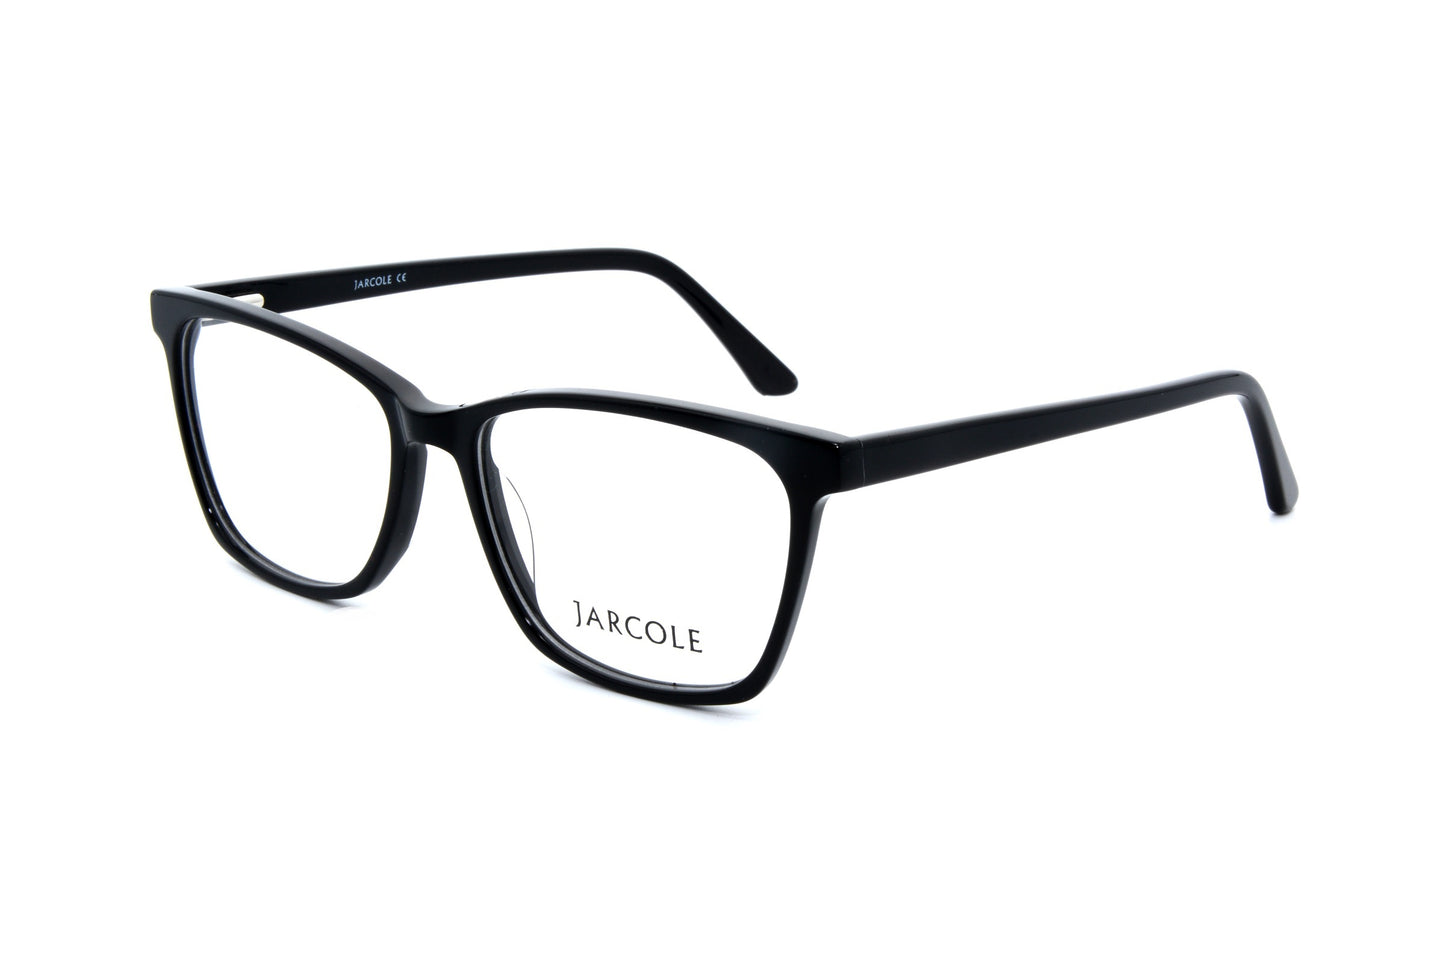 Jarcole eyewear A3006 C1